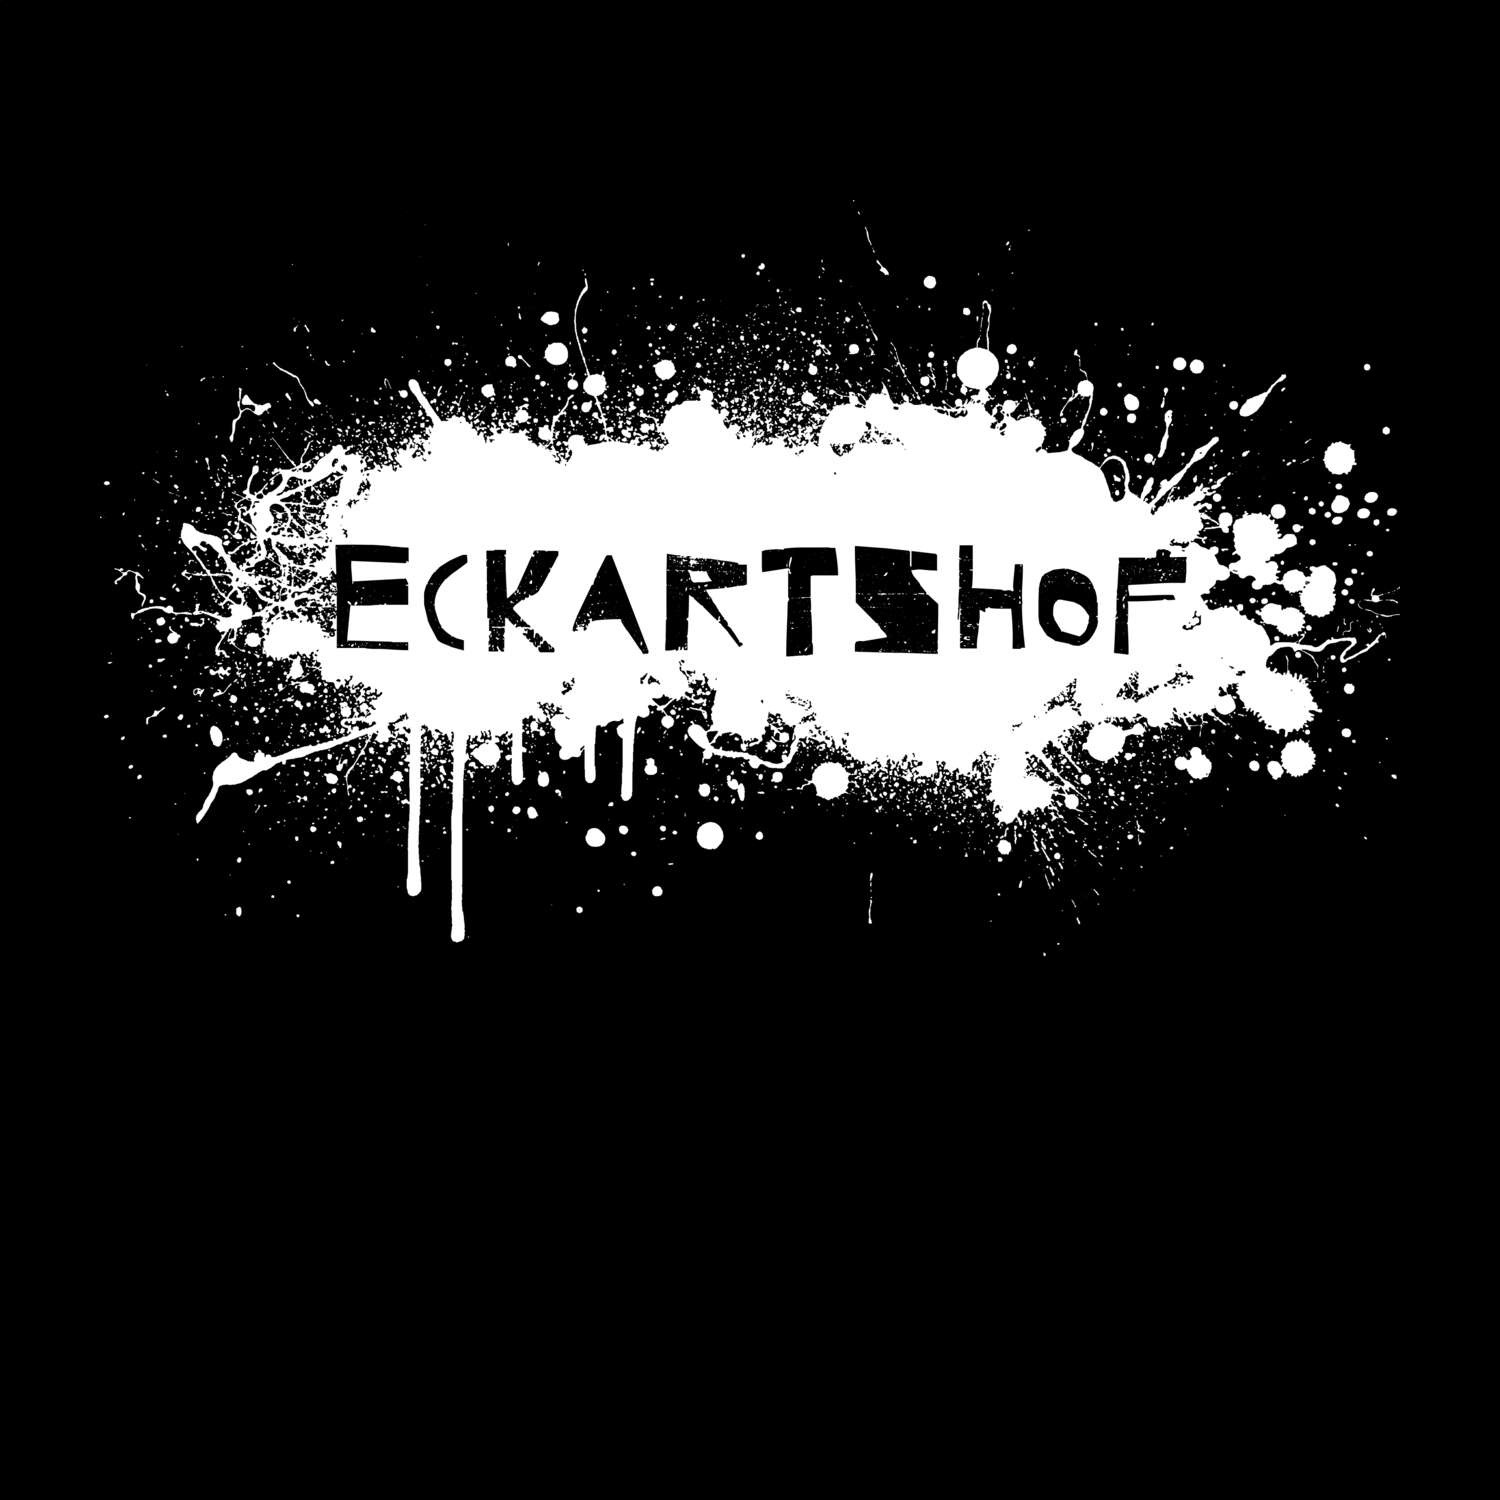 Eckartshof T-Shirt »Paint Splash Punk«